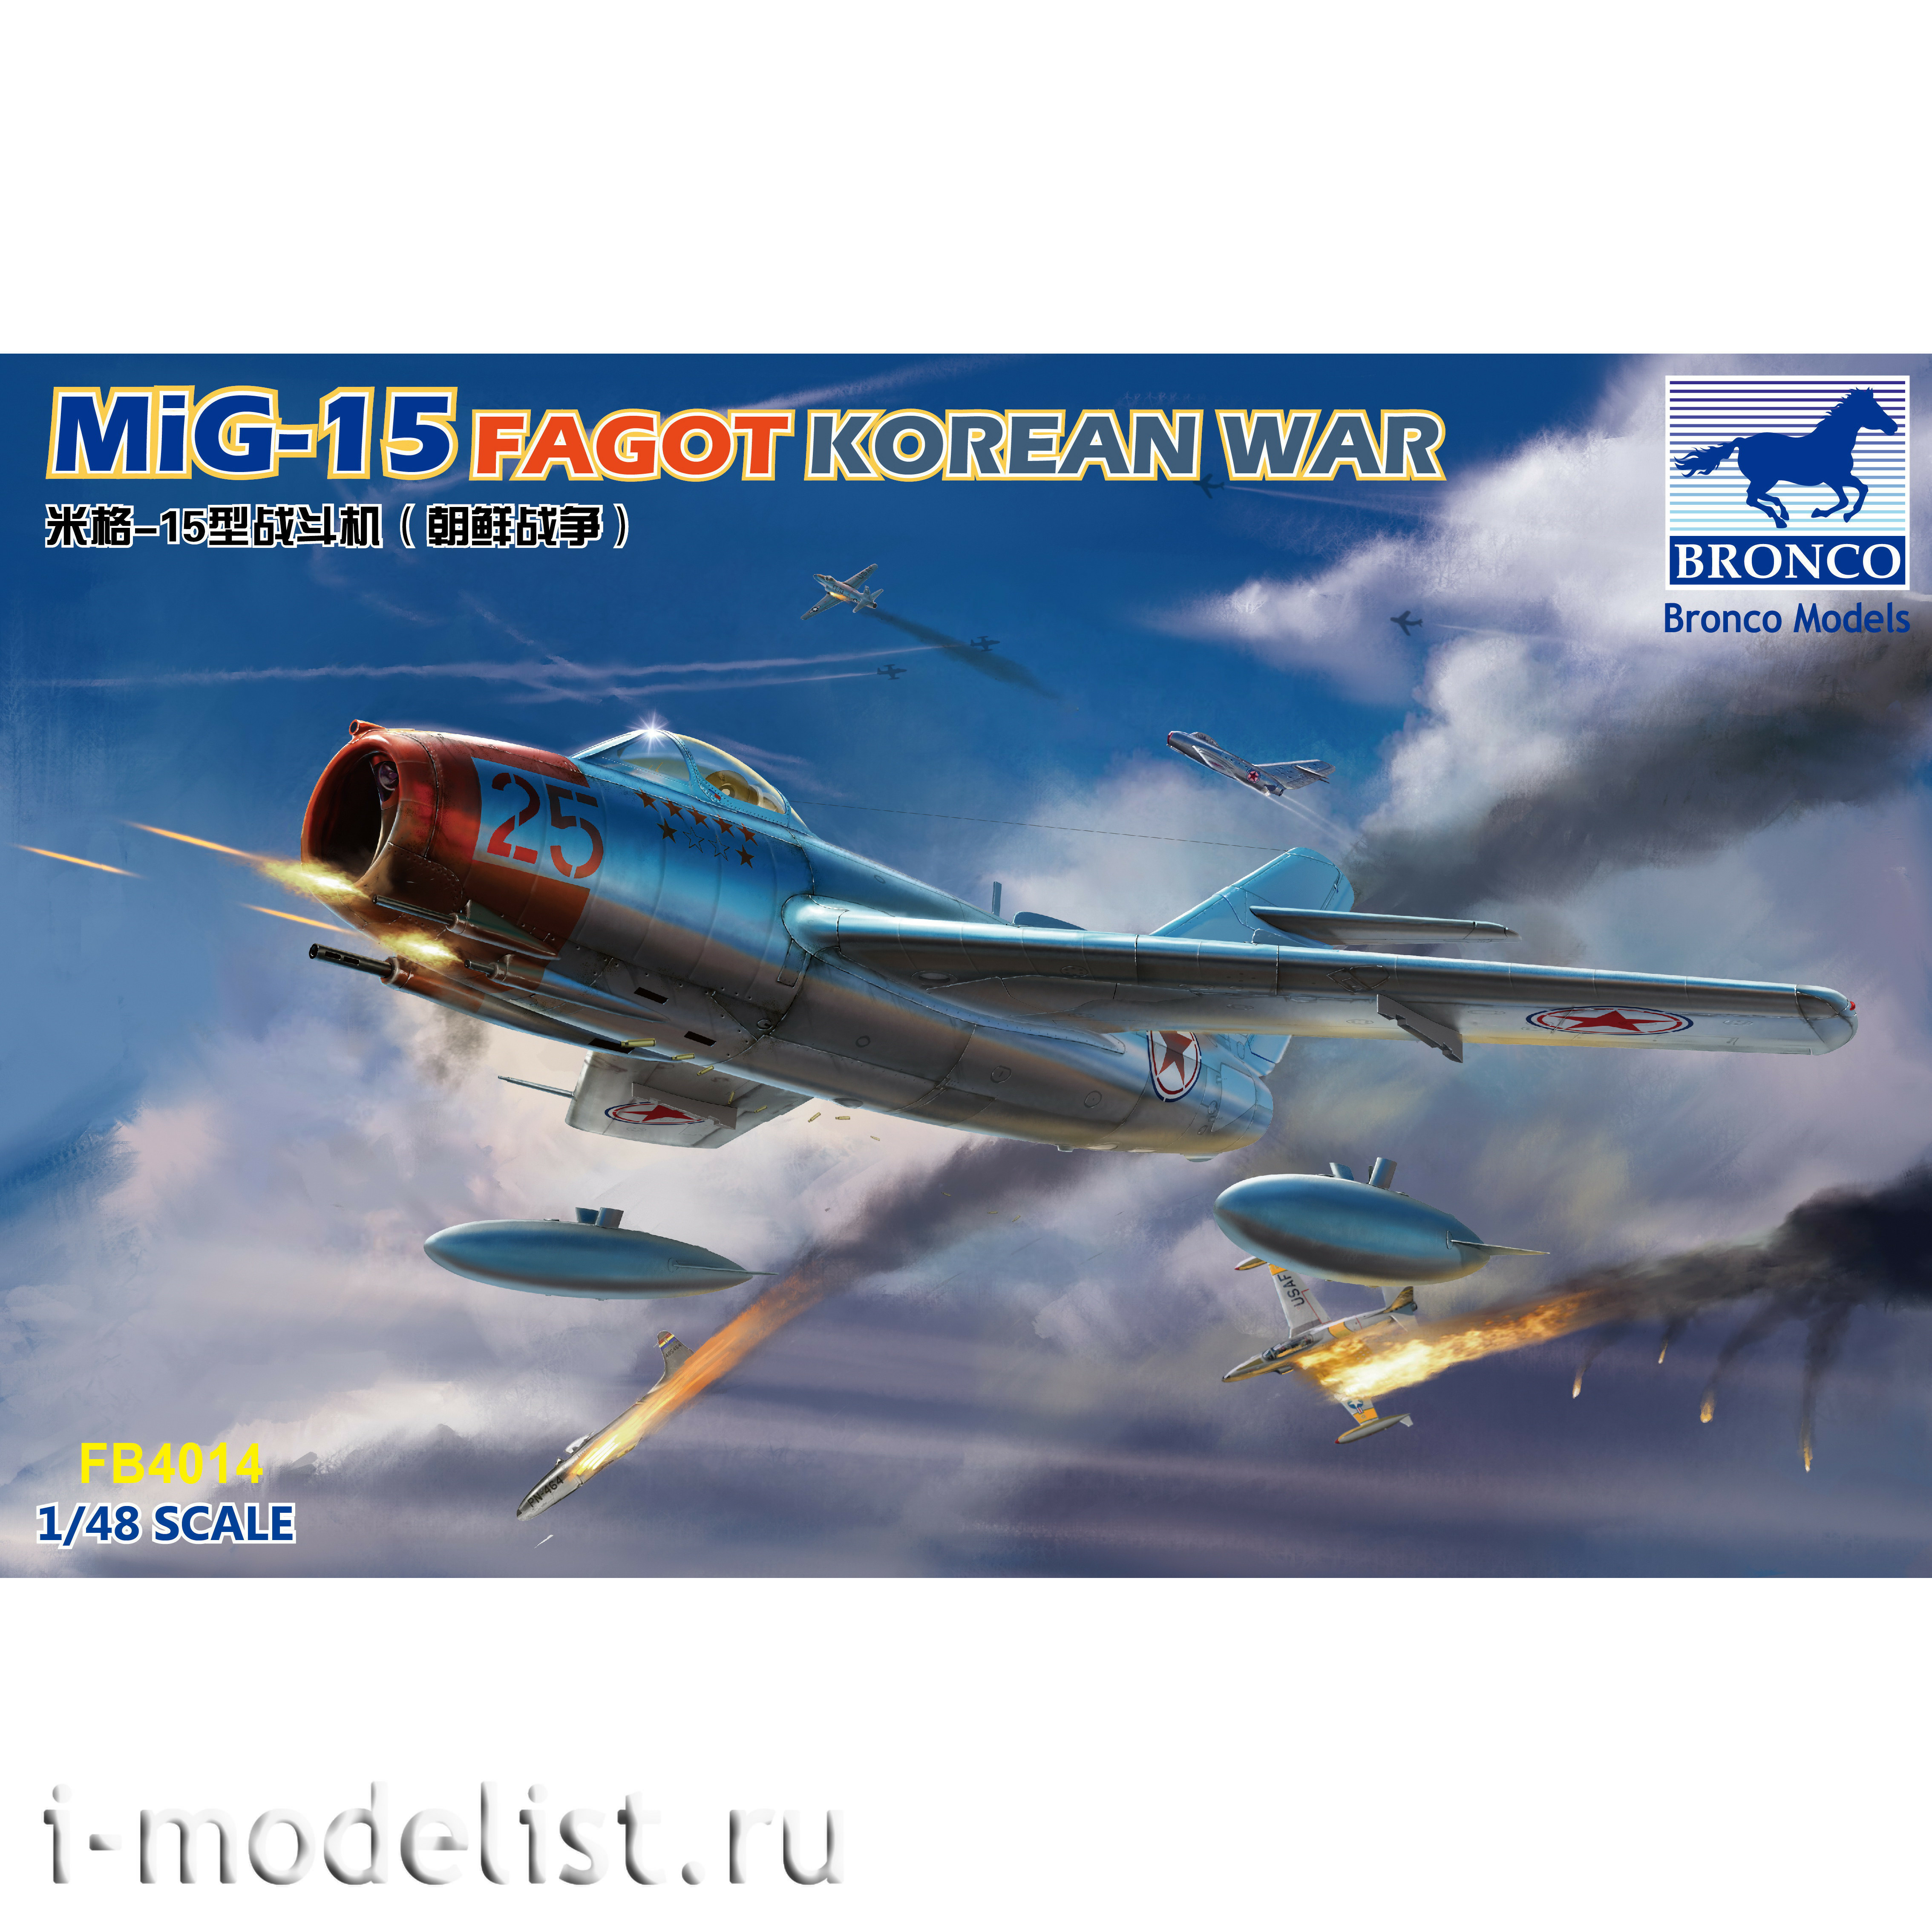 Wheels Set for Hasegawa/Monogram/Tamiya/Trumpeter kits early 1/48 MiG-15 